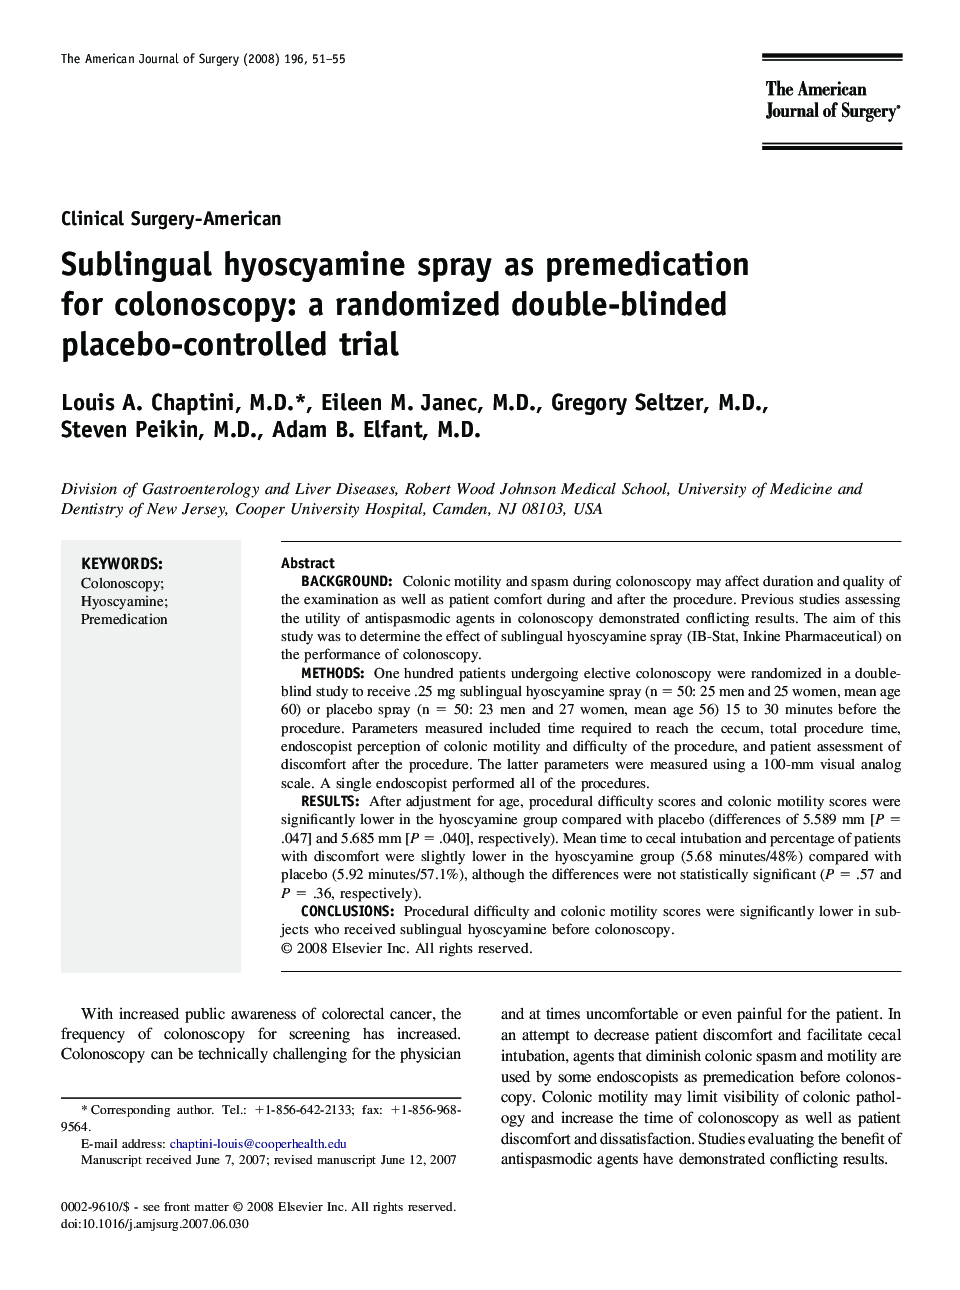 Sublingual hyoscyamine spray as premedication for colonoscopy: a randomized double-blinded placebo-controlled trial